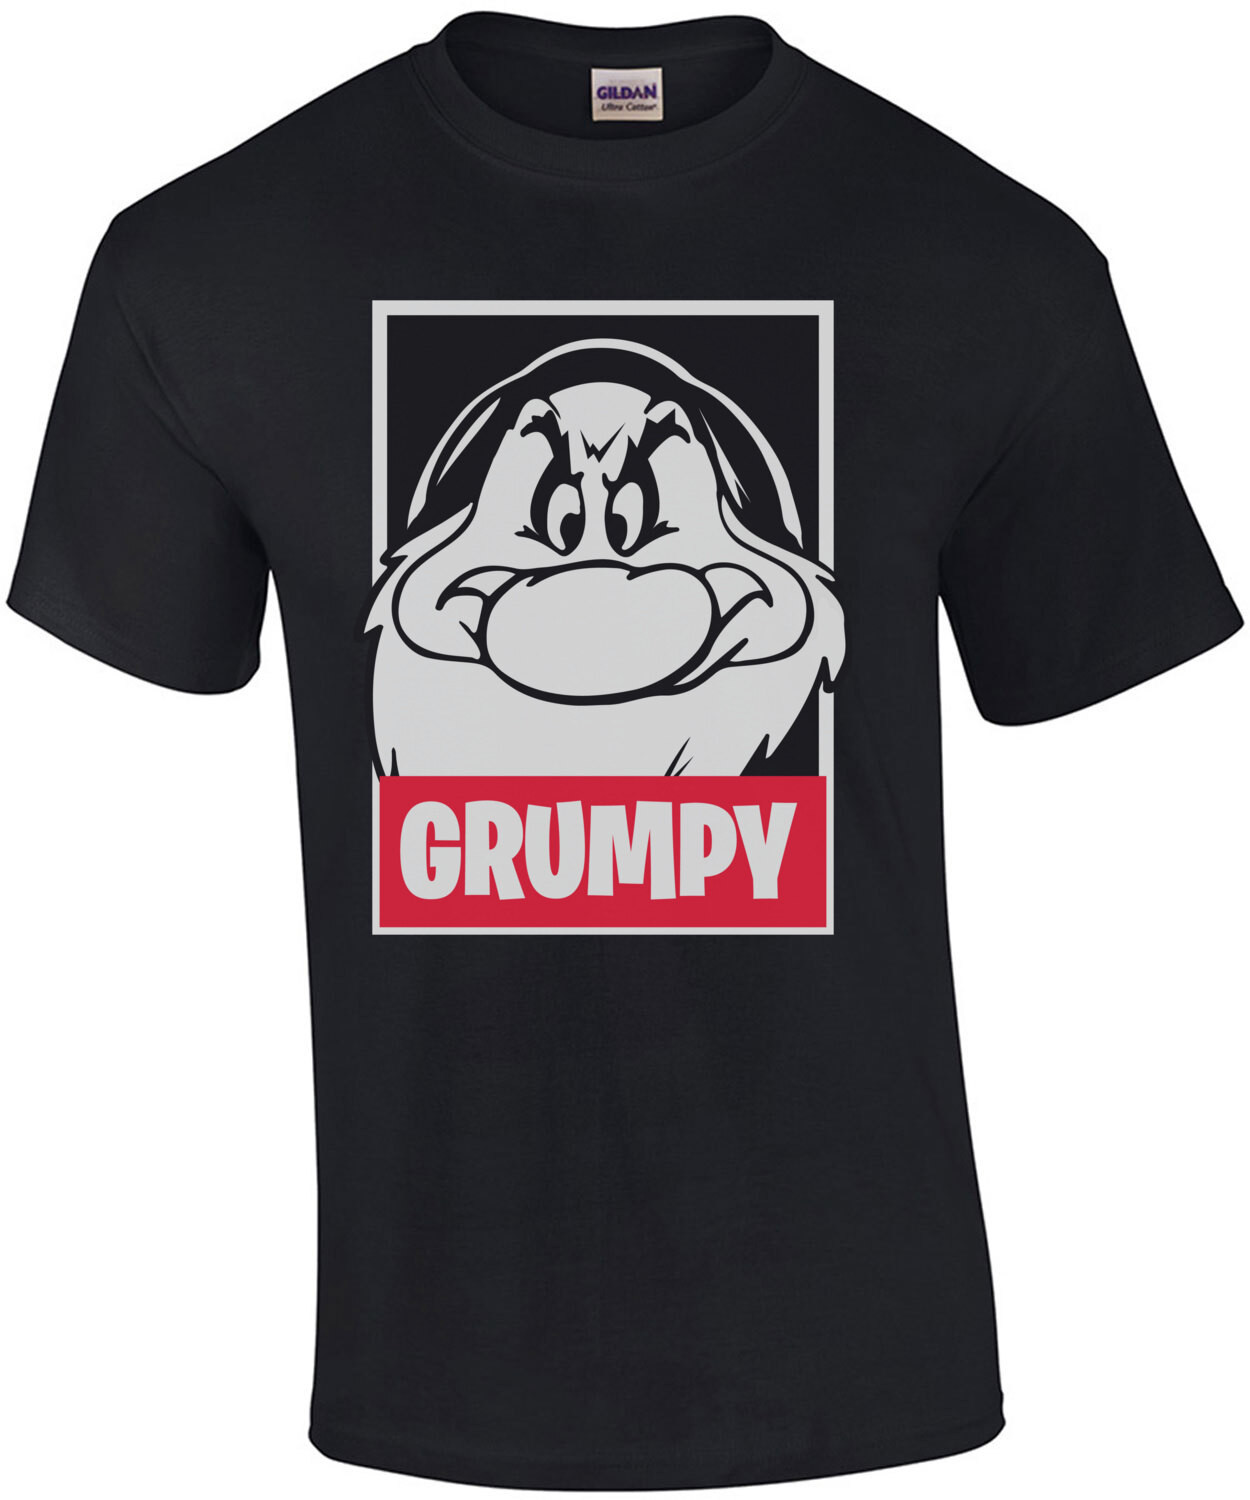 Grumpy - Snow White And The Seven Dwarfs T-Shirt